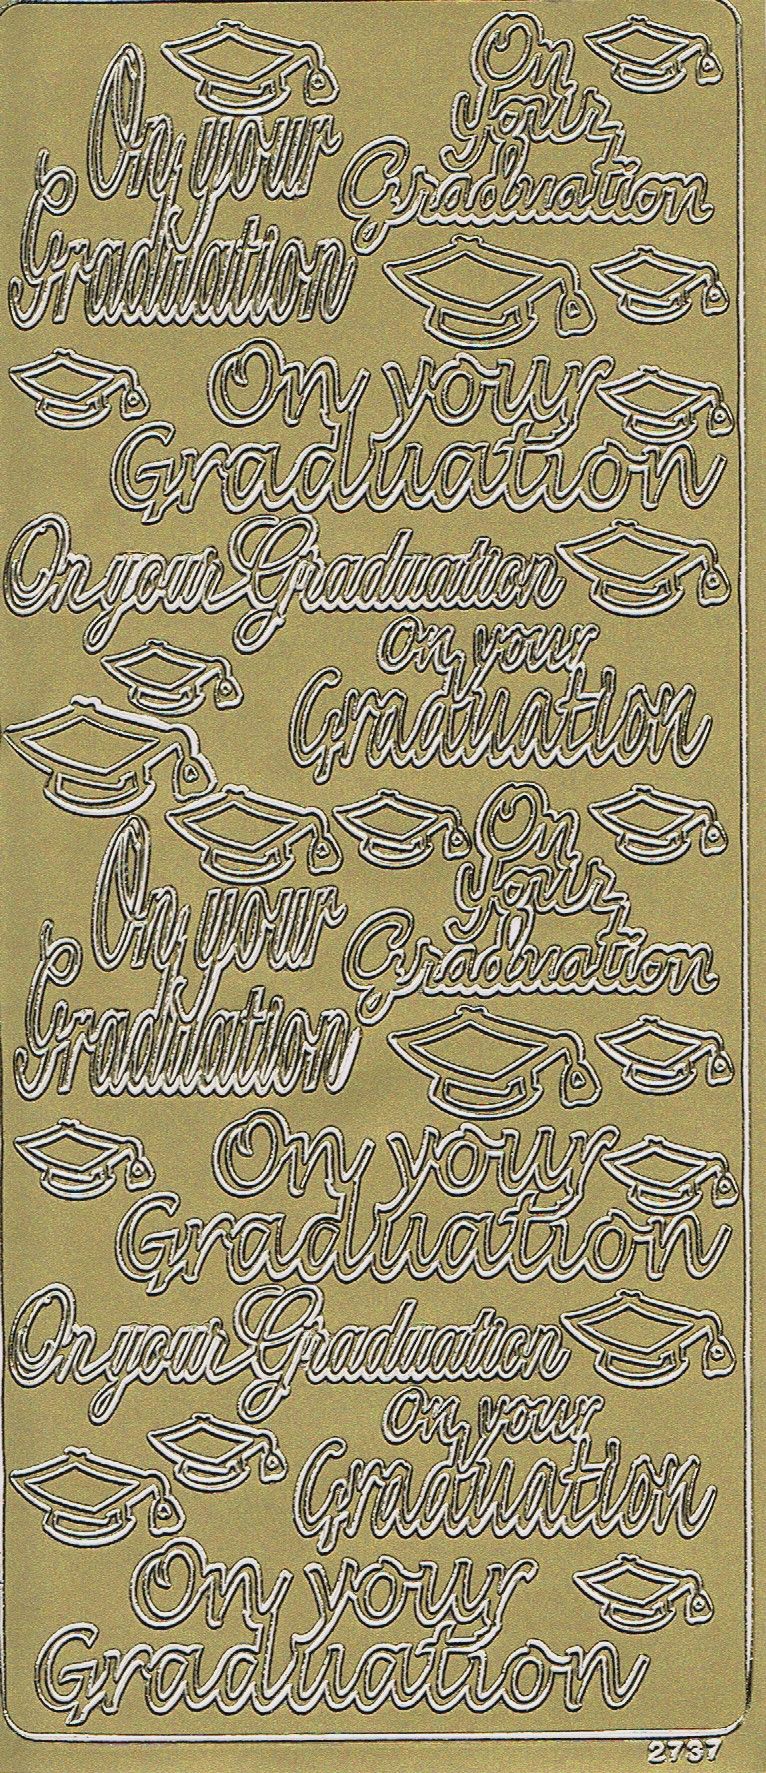 On Your Graduation peel-off 2737